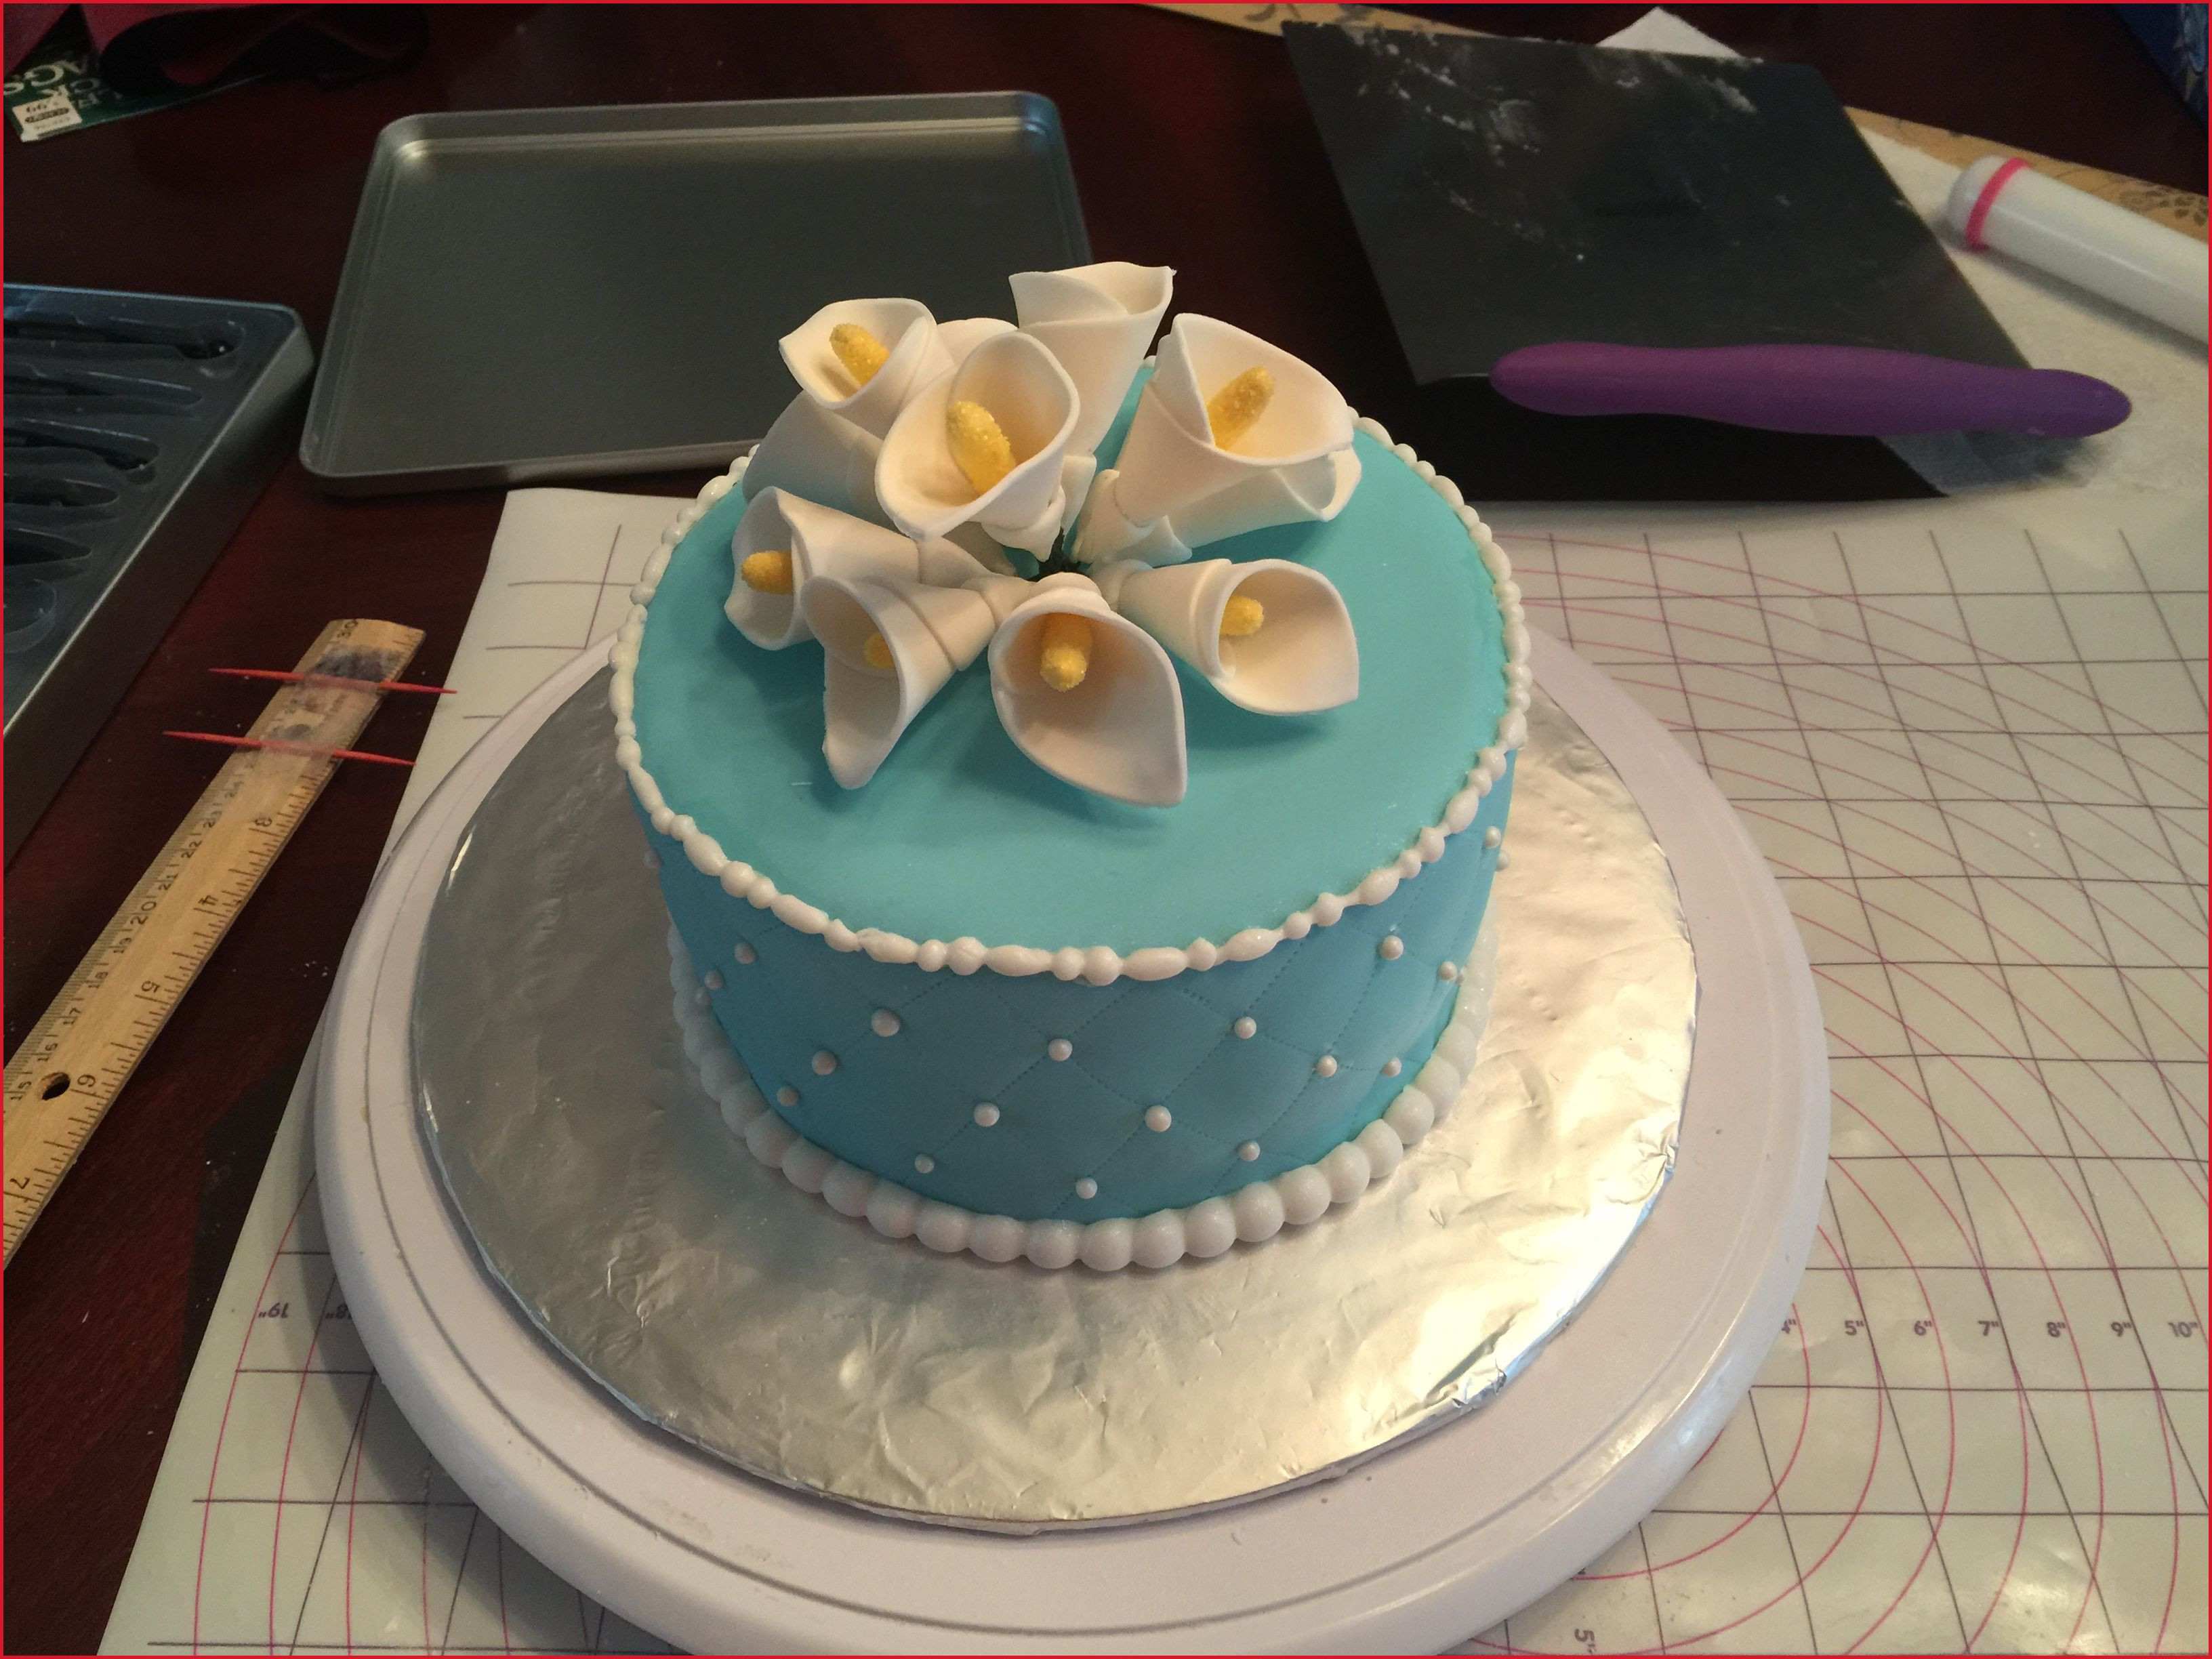 Best ideas about Homemade Birthday Cake Ideas
. Save or Pin Awesome Homemade Birthday Cake Ideas Gallery Birthday Now.